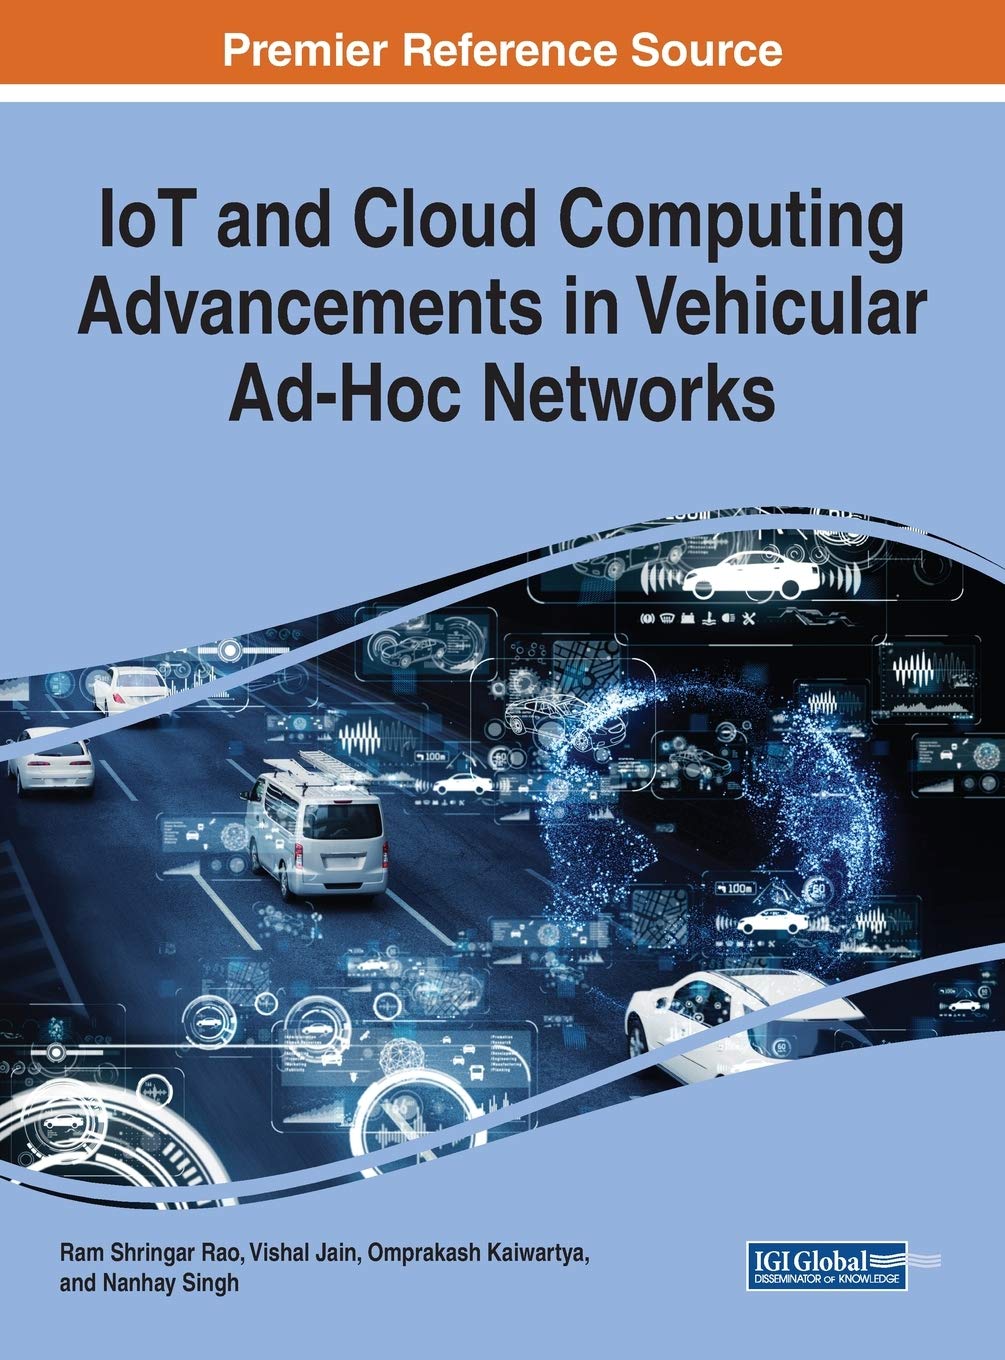 IoT and Cloud Computing Advancements in Vehicular Ad-Hoc Networks | Ram Shringar Rao, Vishal Jain